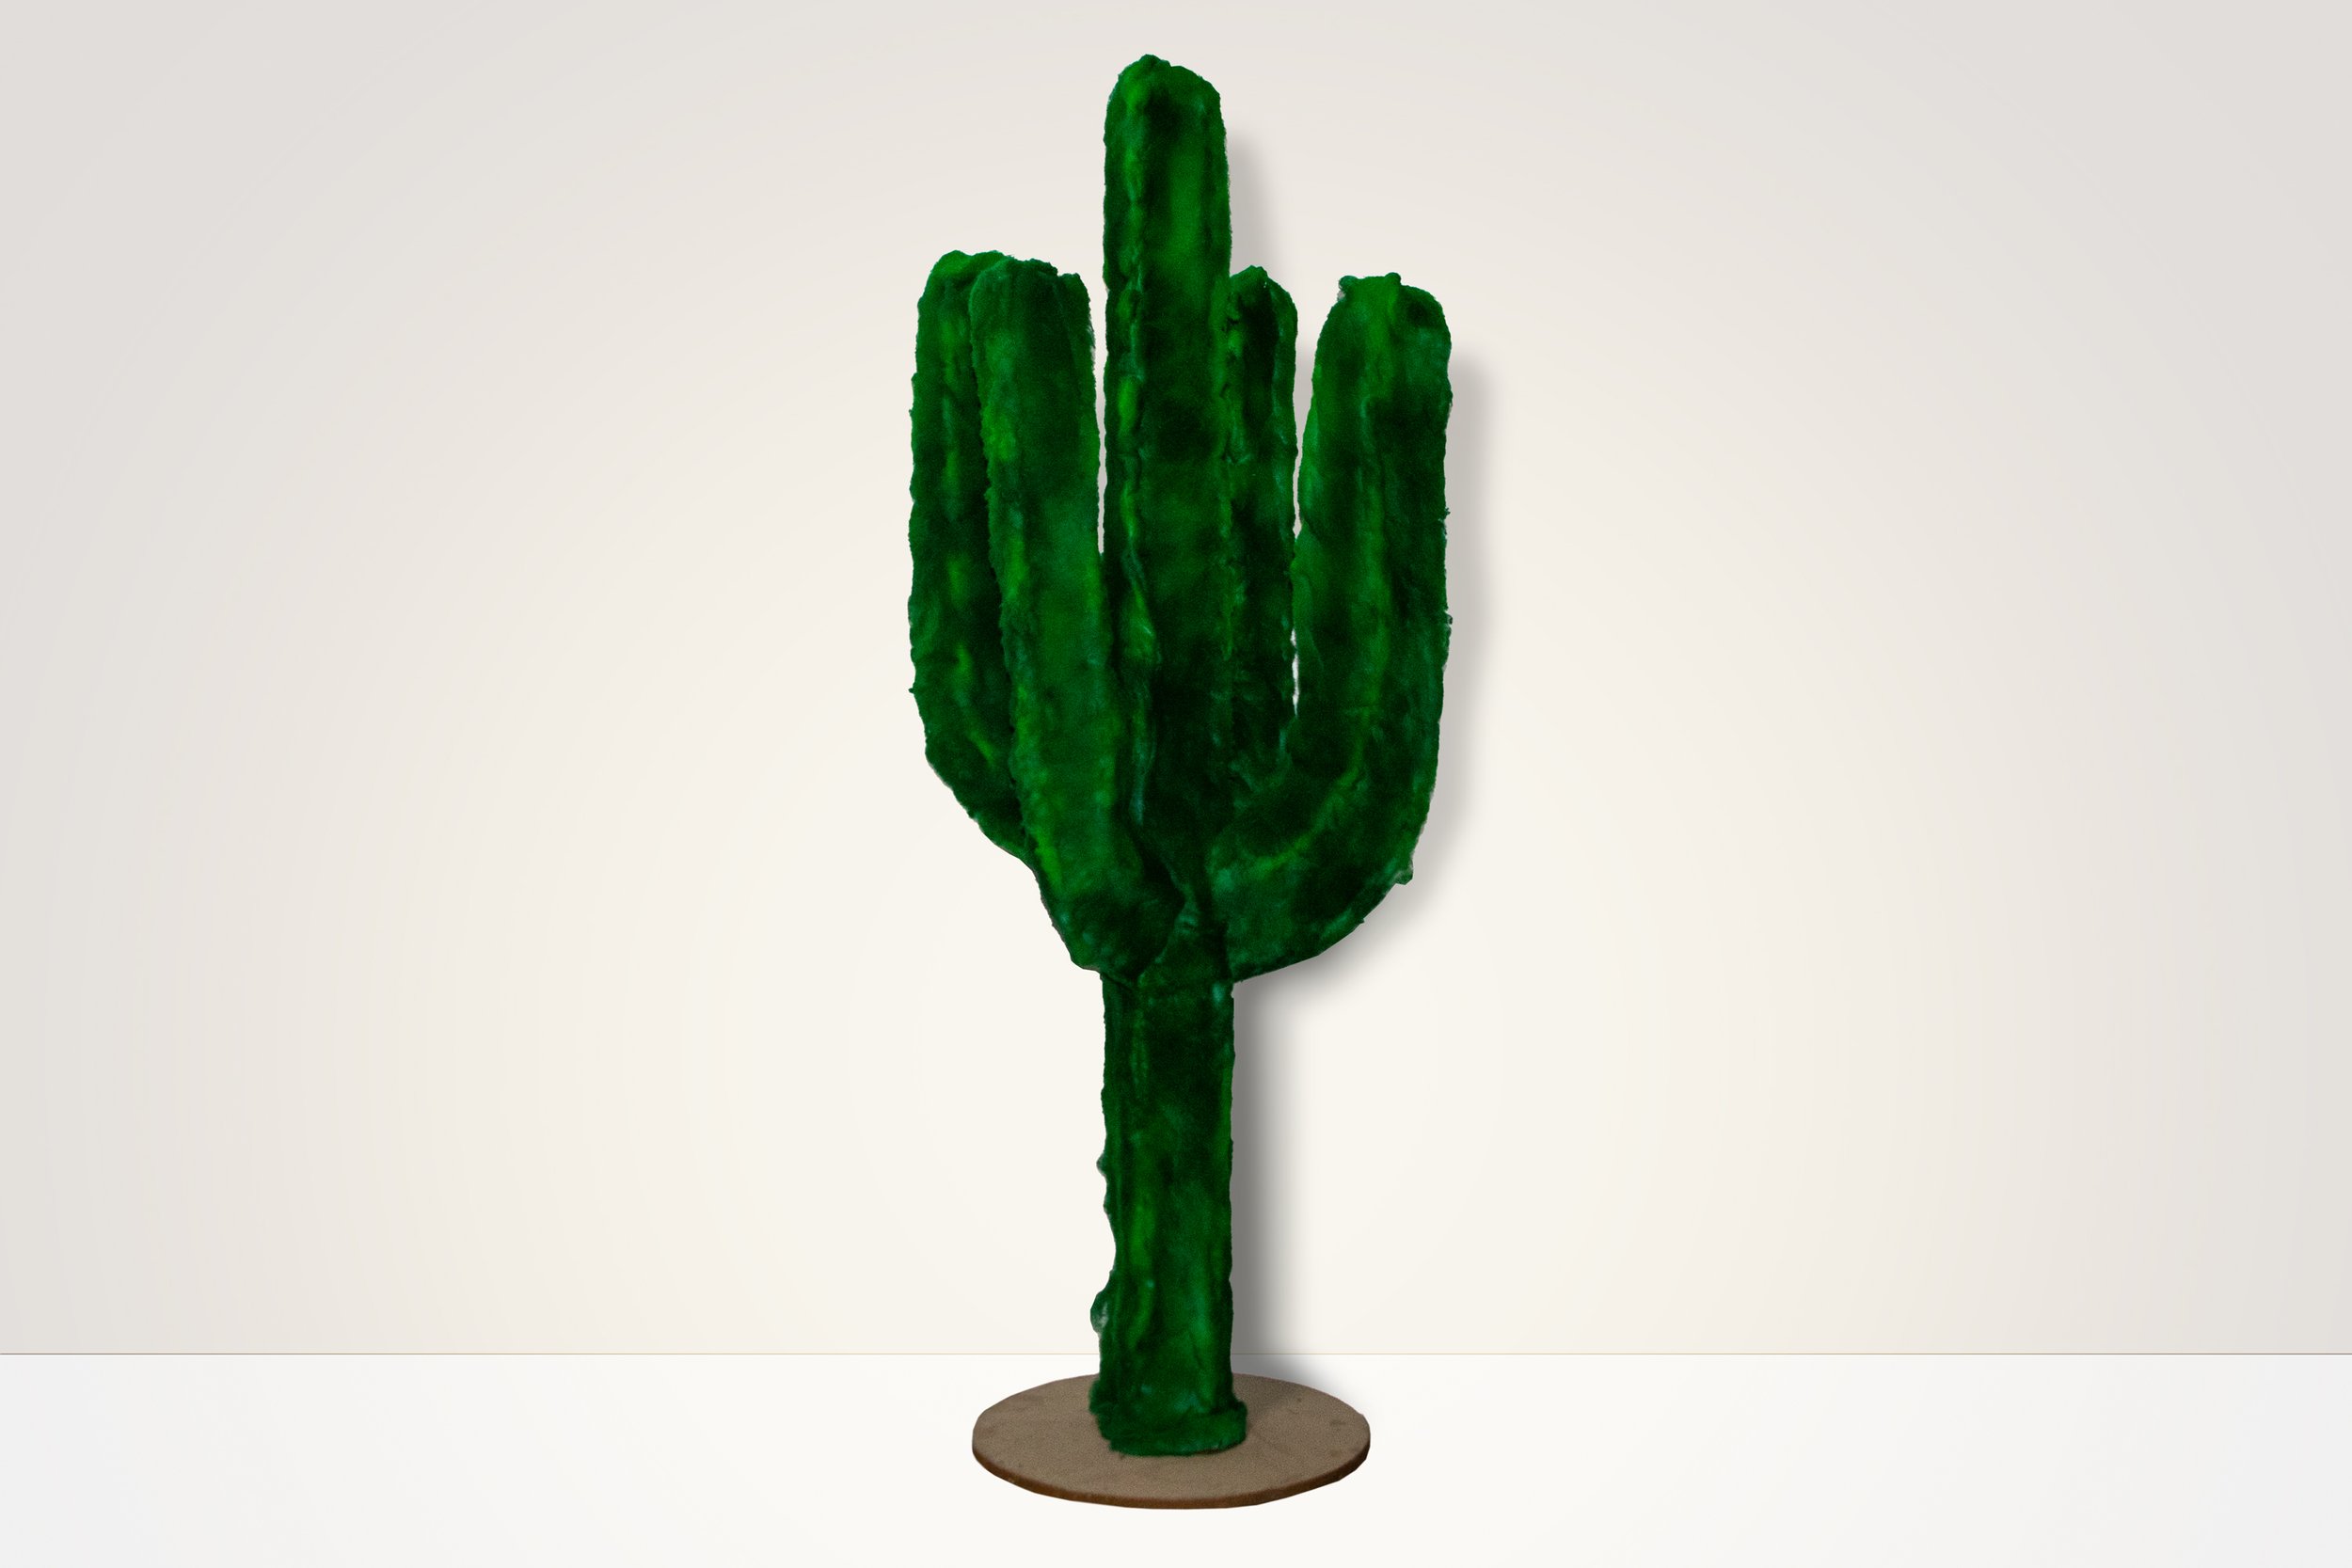 The Fuzzy Green Cactus